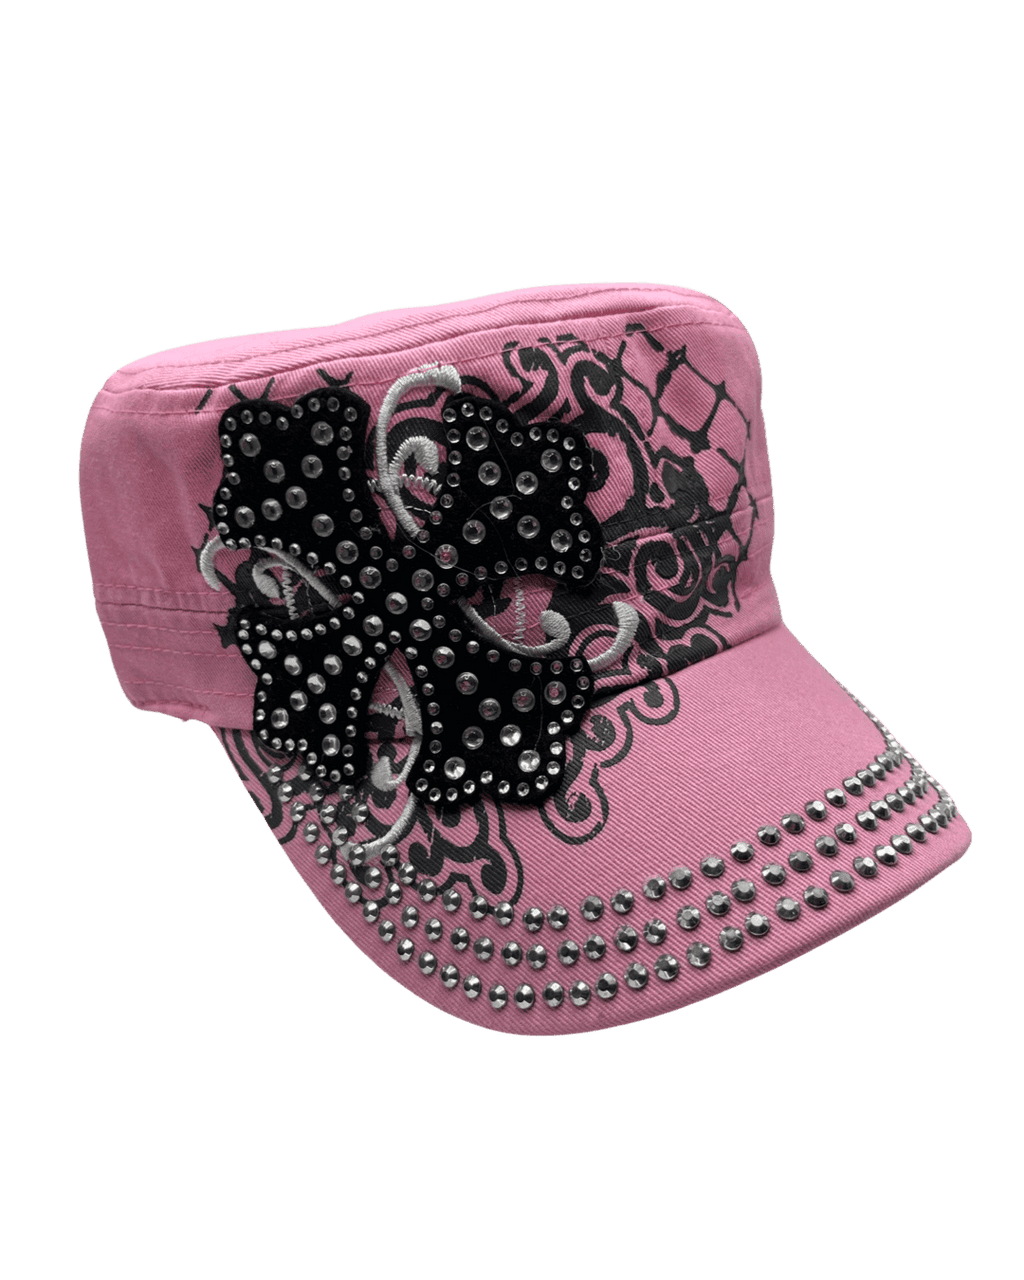 Roxy cadet hat - soft pink ☆